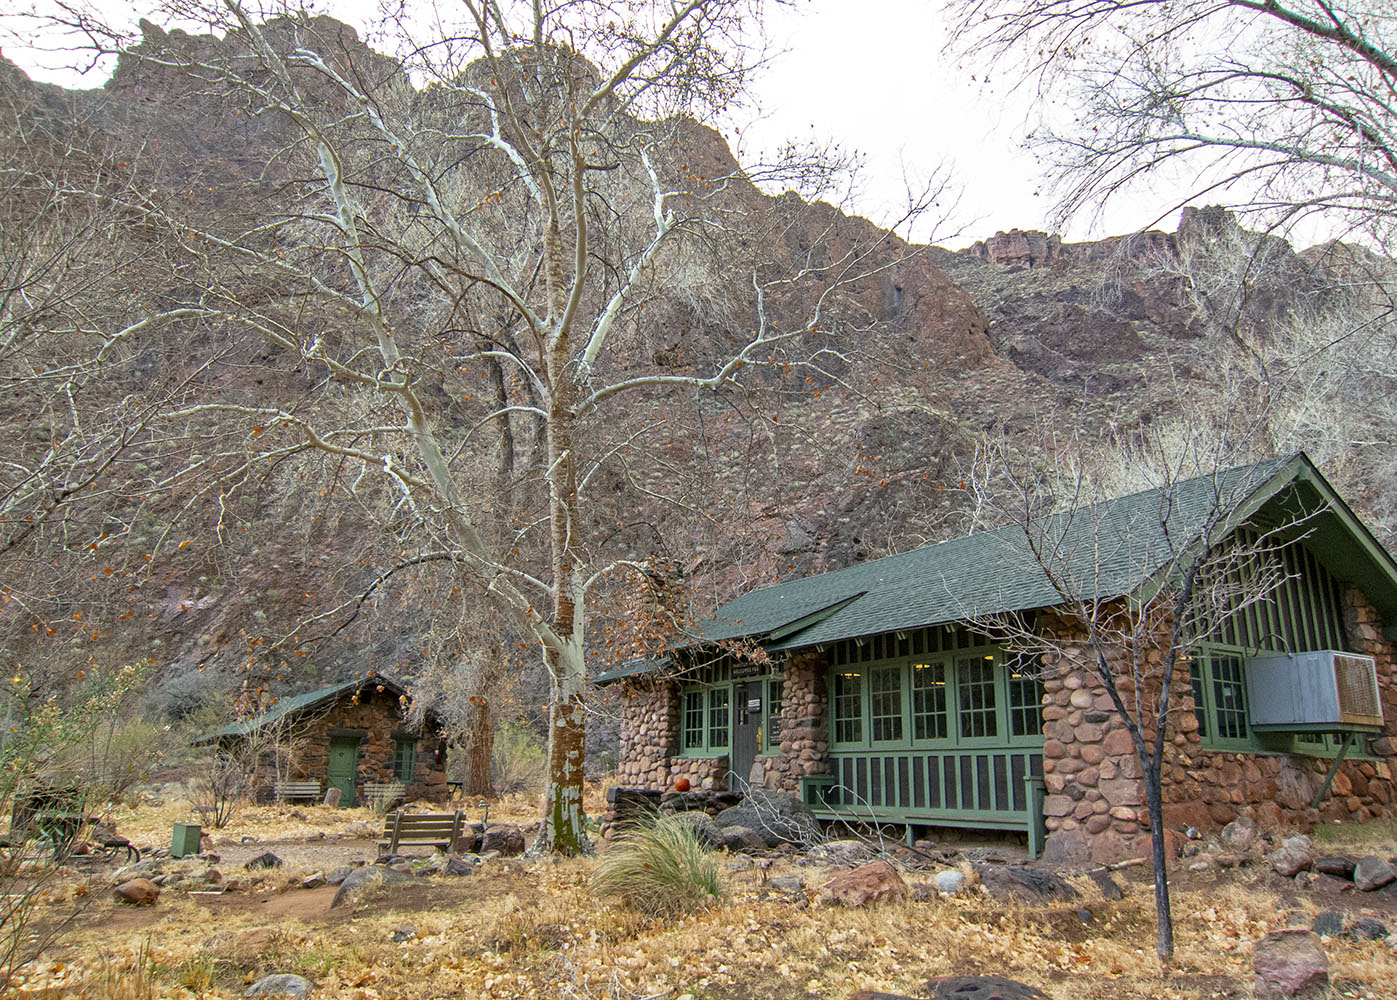 Phantom Ranch cabins and canteen